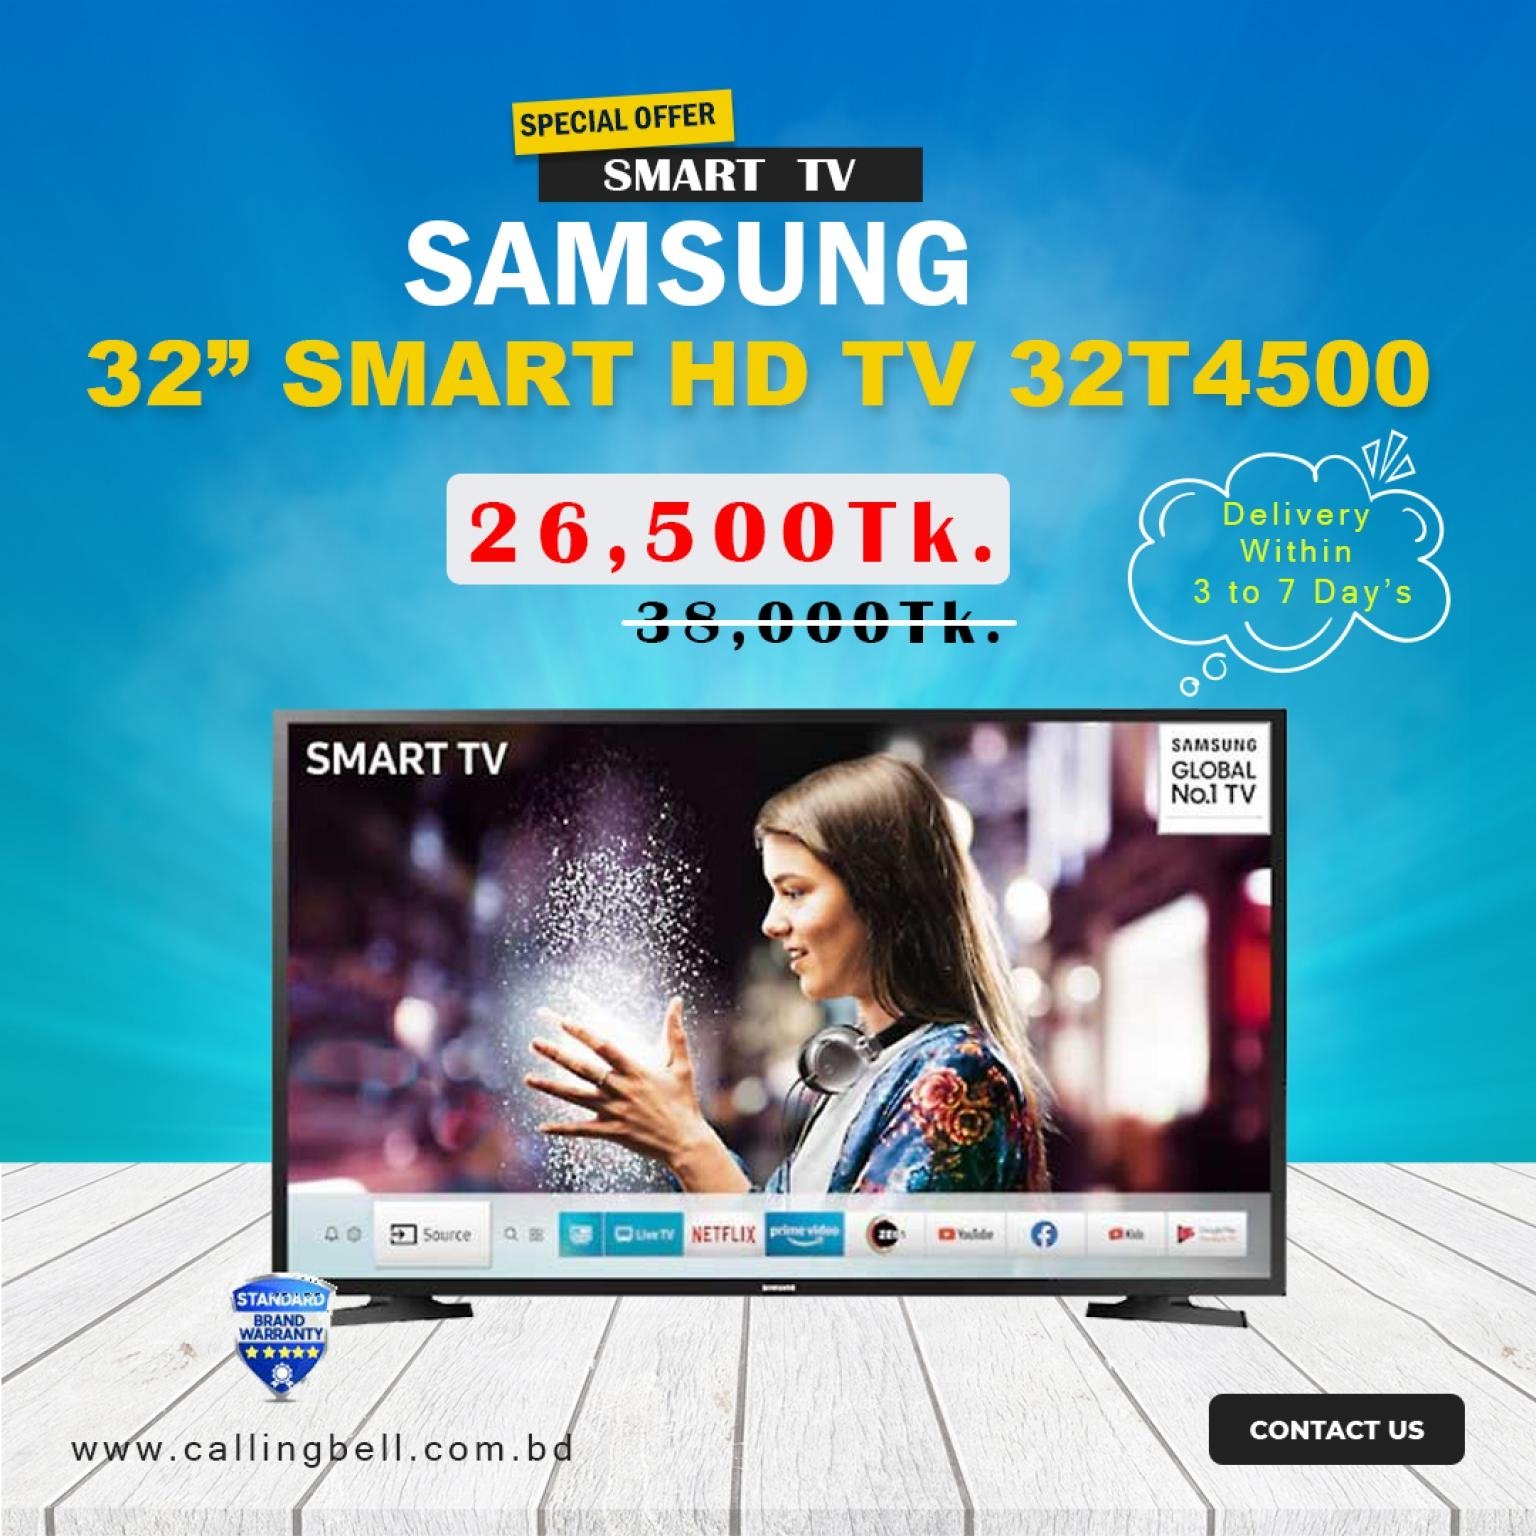 Samsung 32'' Smart HD TV 32T4500